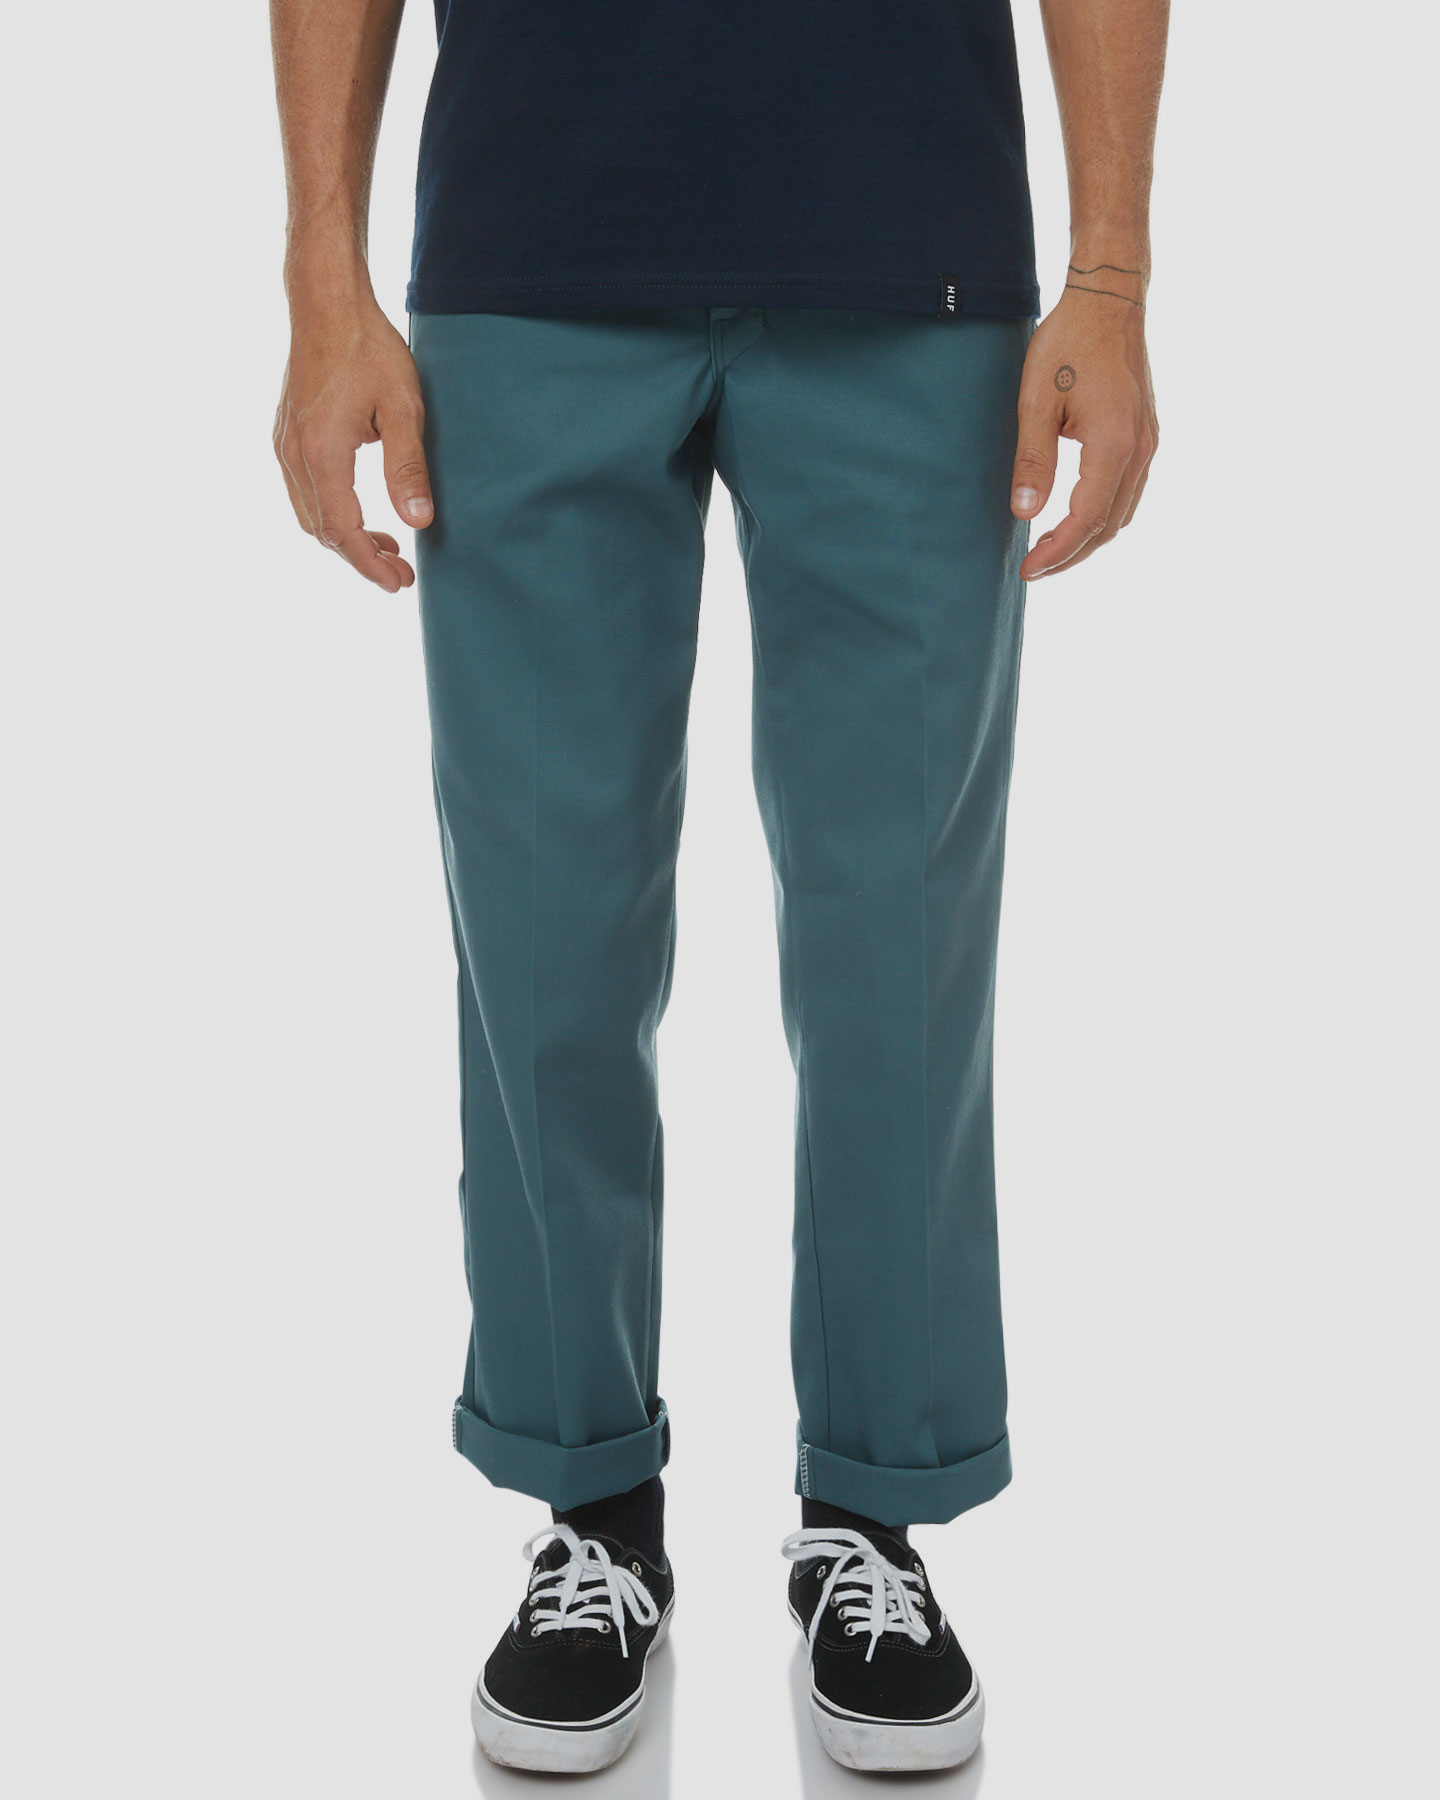 Dickies Regular Straight Skate Pants - lincoln green